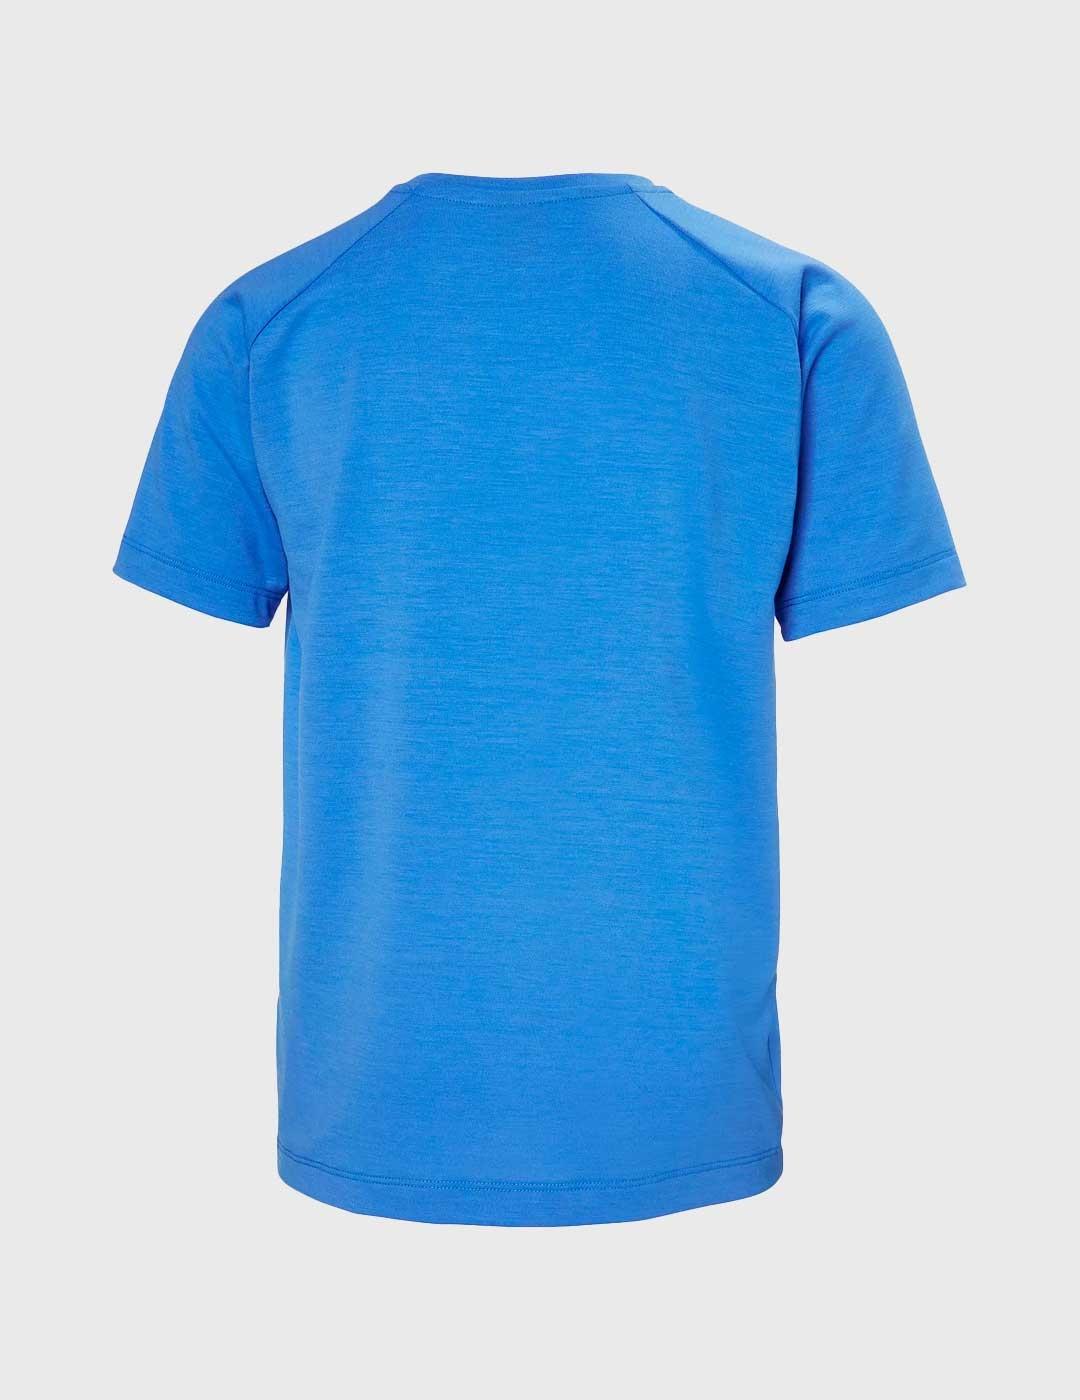 Camiseta Helly Hansen Port azul para niño y niña